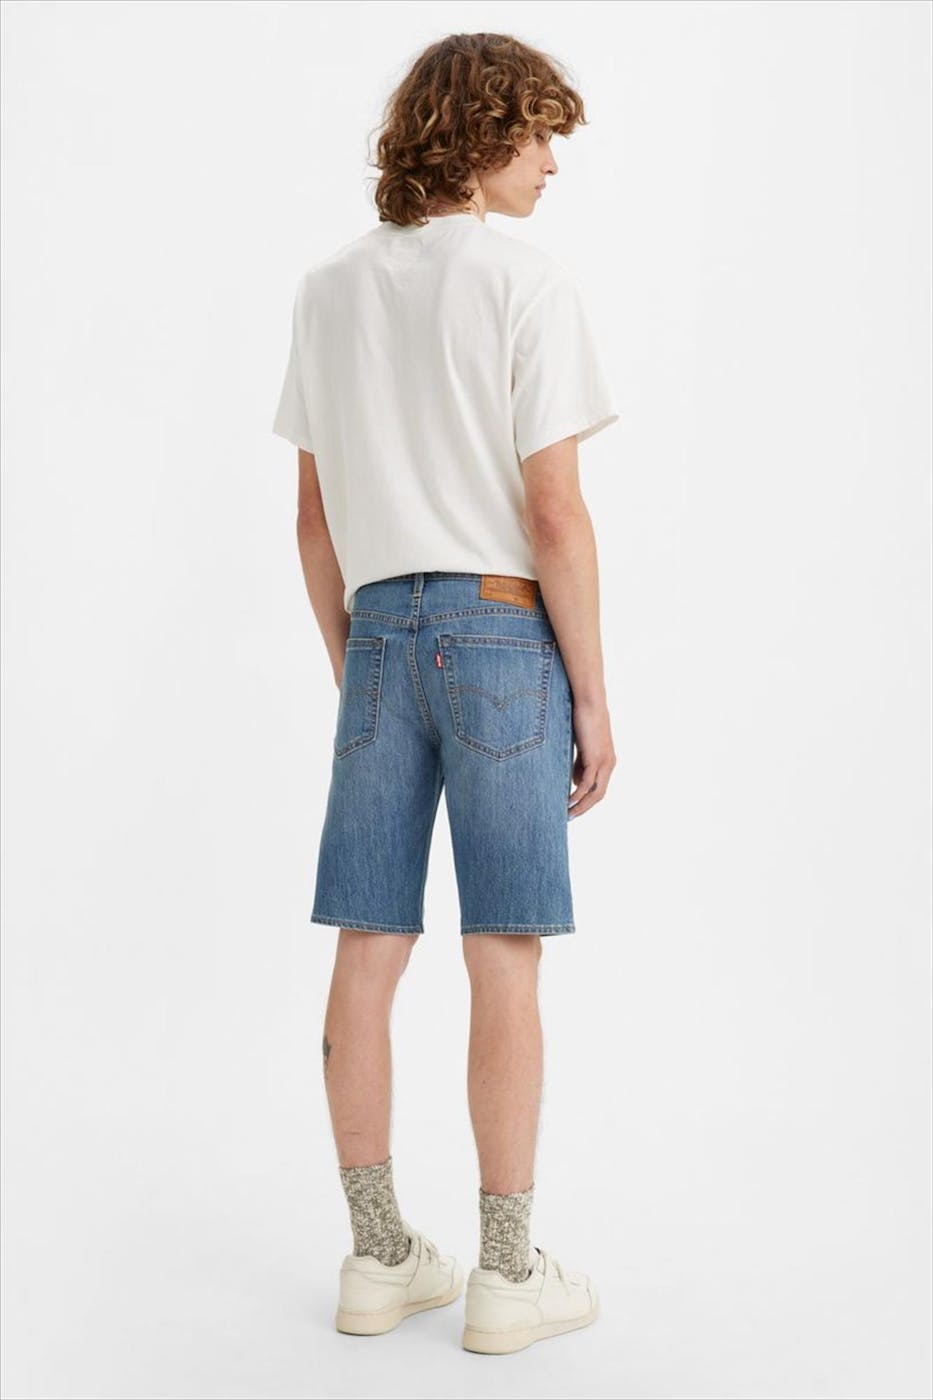 Levi's - Blauwe Ademende 405 Jeans short